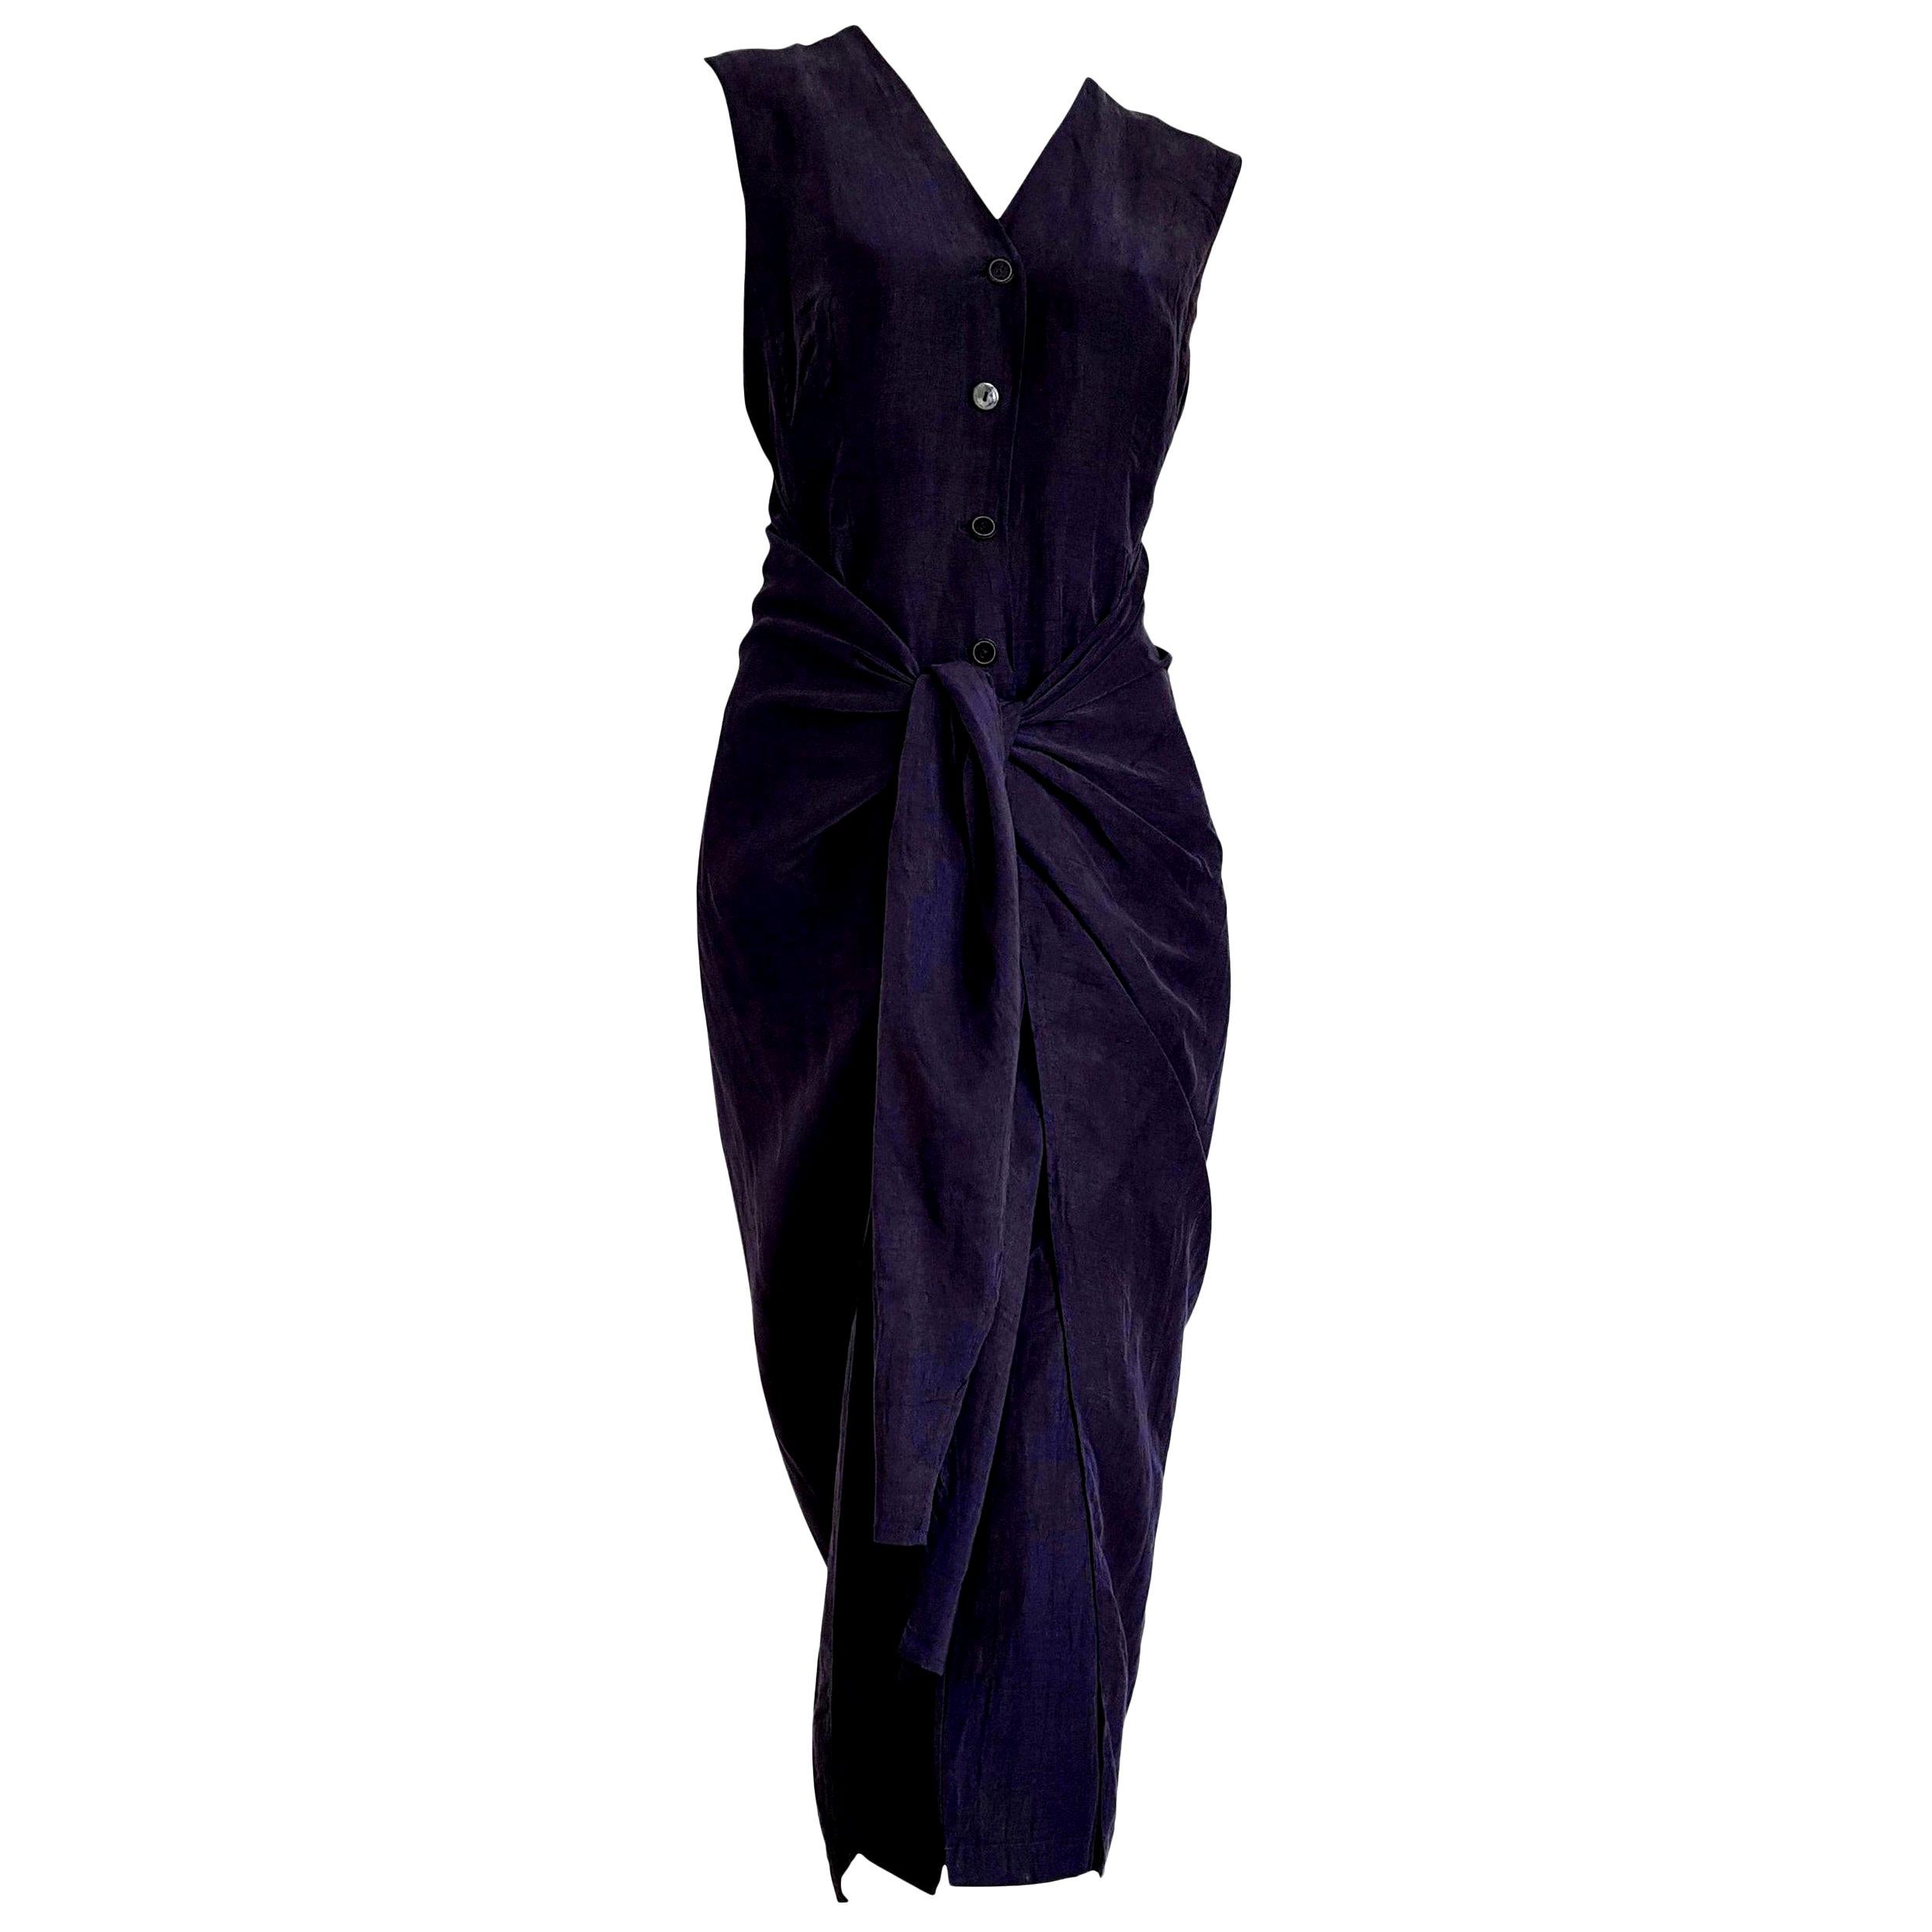 JIL SANDER "New" Blue Silk Linen Dress with Front or Back Bow - Unworn  For Sale